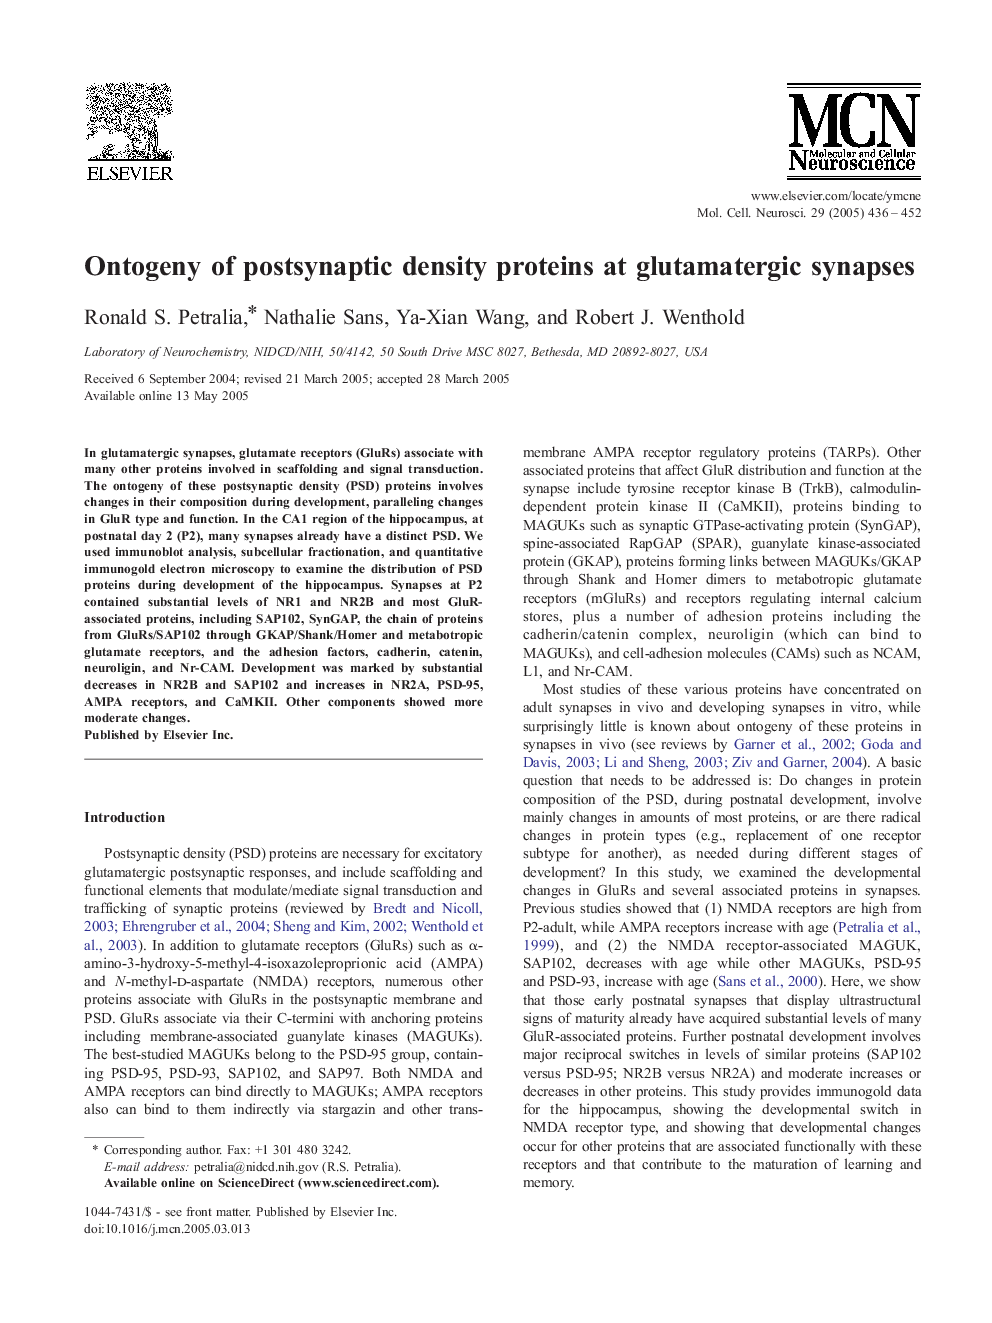 Ontogeny of postsynaptic density proteins at glutamatergic synapses